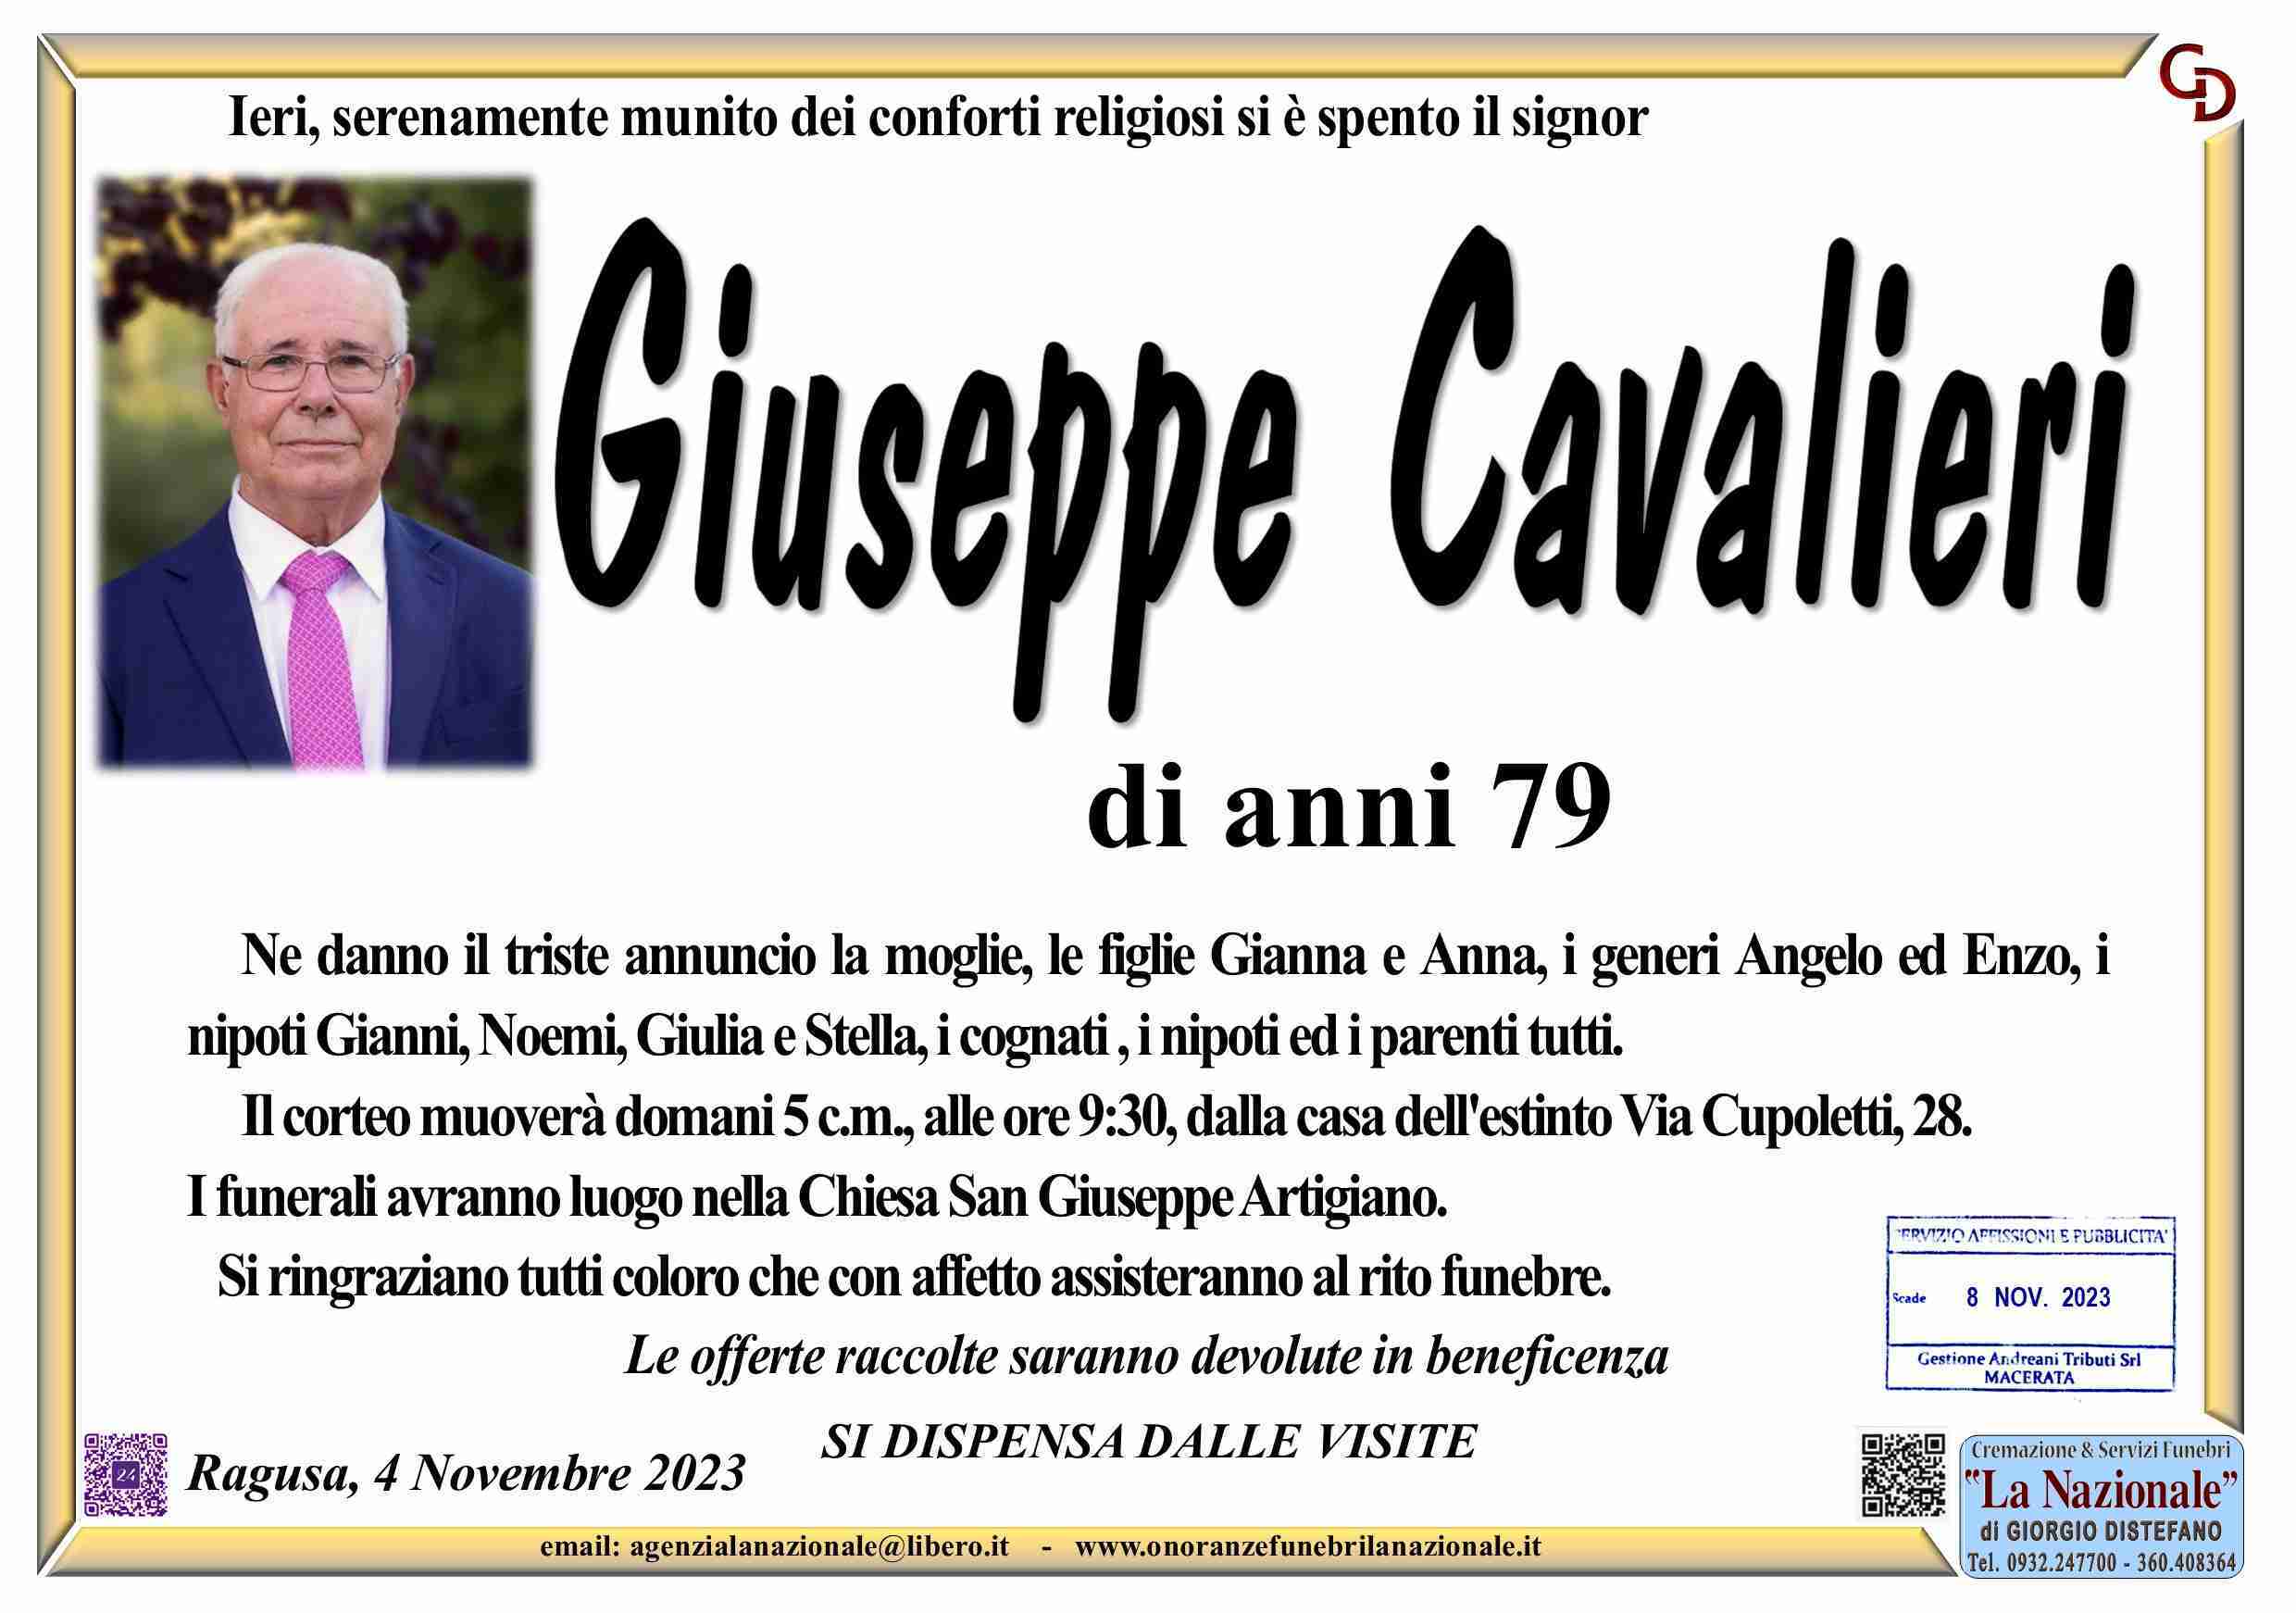 Giuseppe Cavalieri